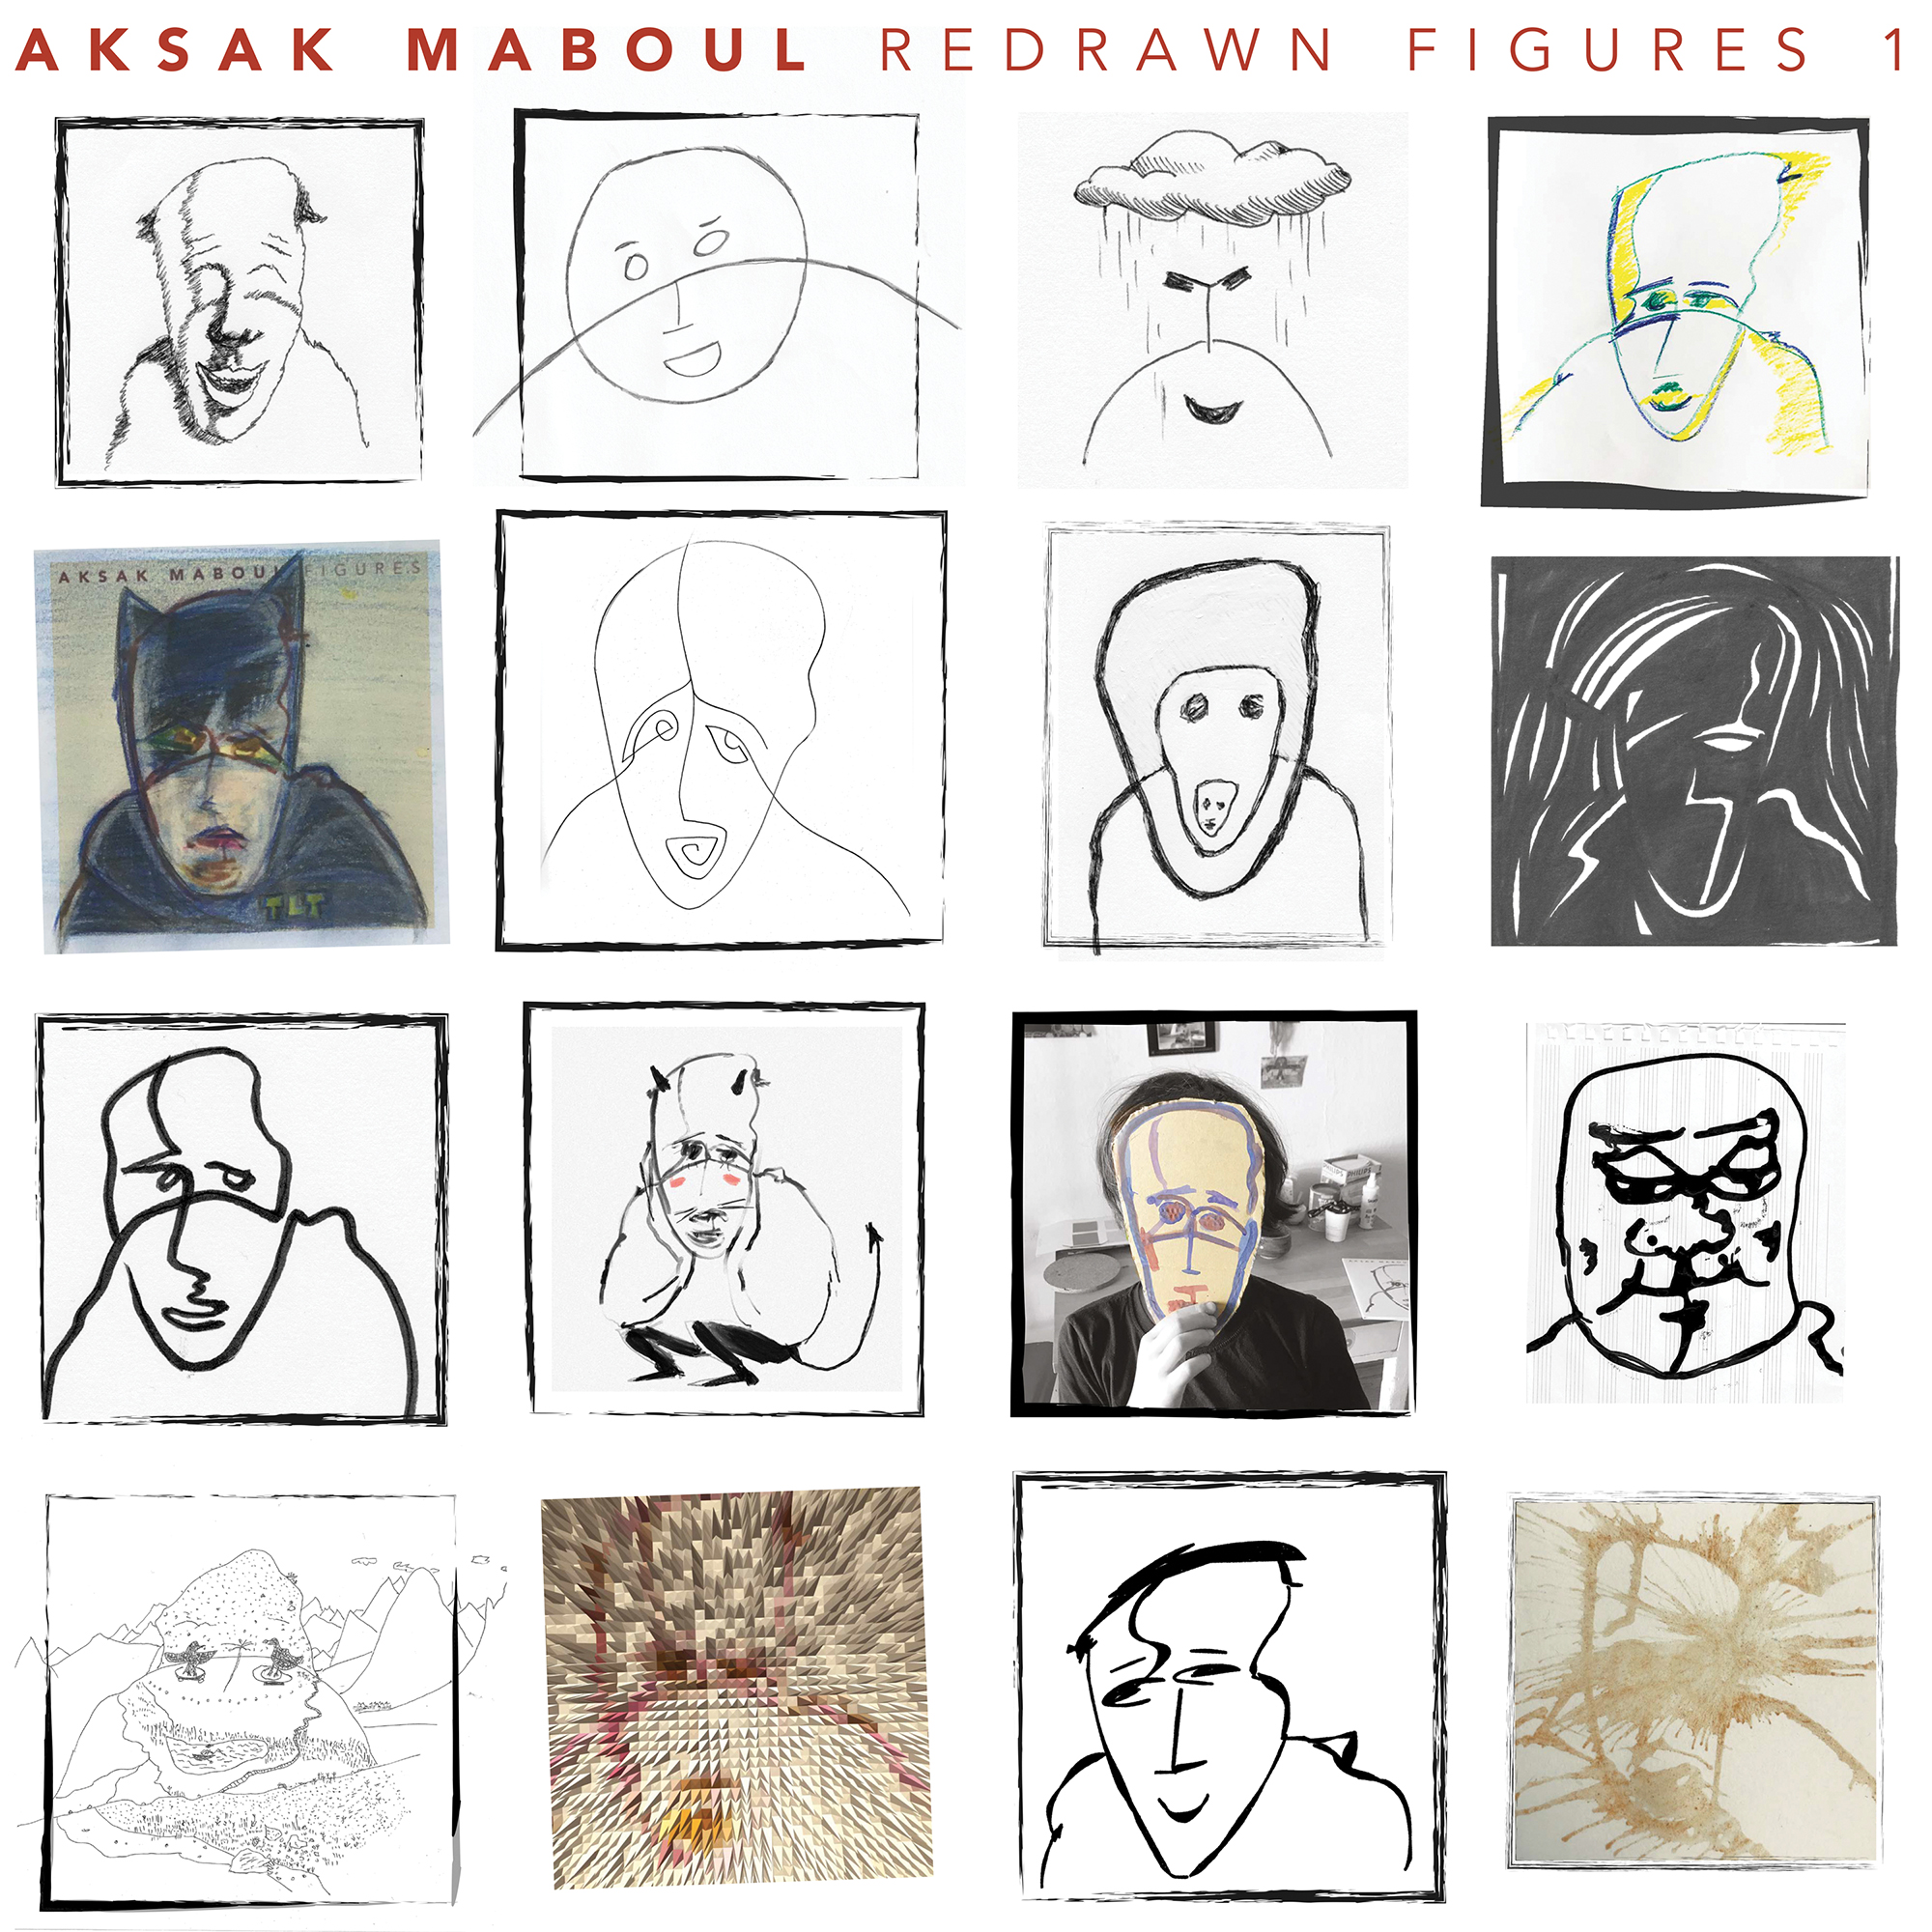 AKSAK MABOUL - Redrawn Figures 1